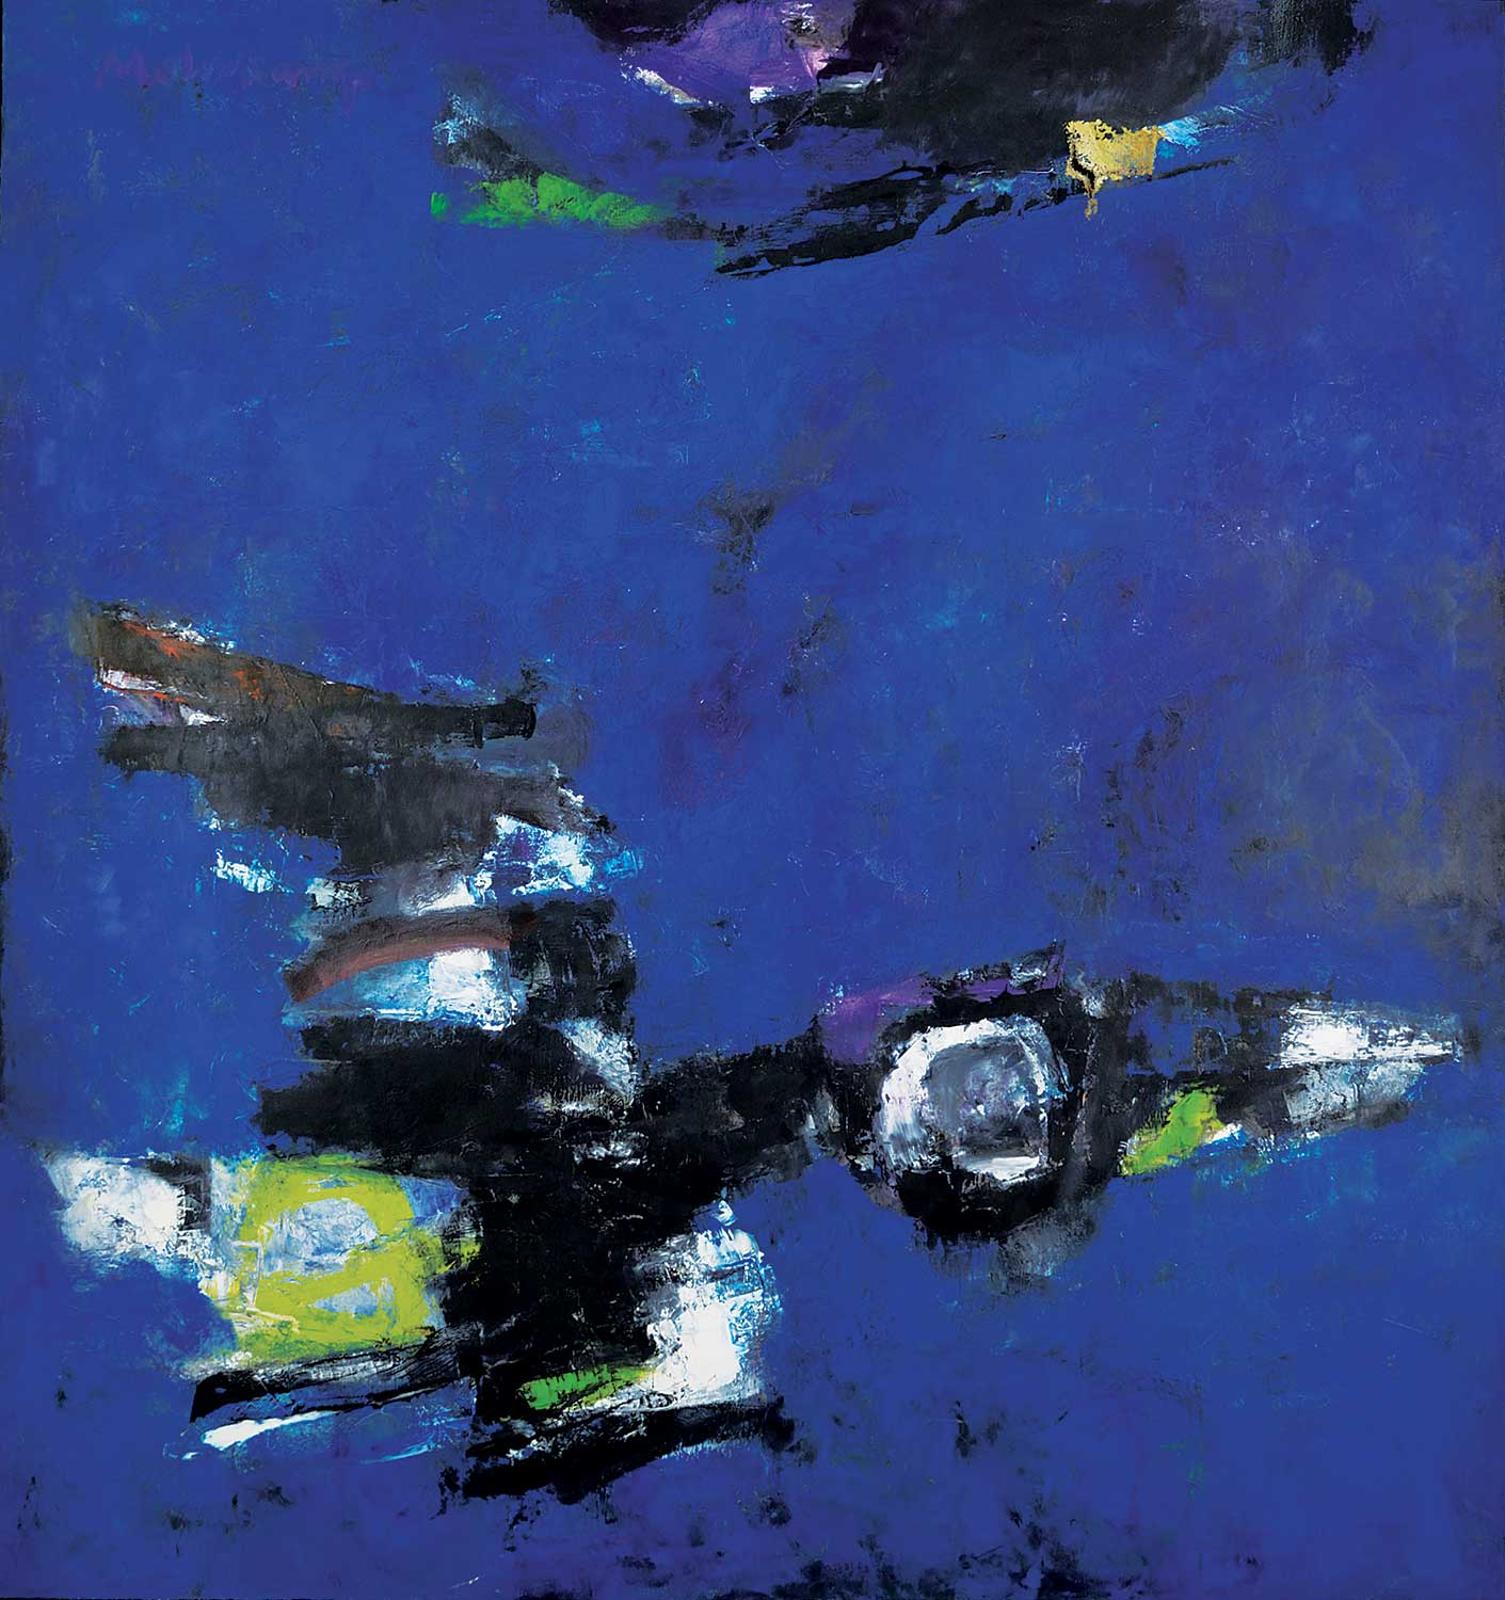 Nico Molenkamp - Untitled - Blue, Green and Black Abstract